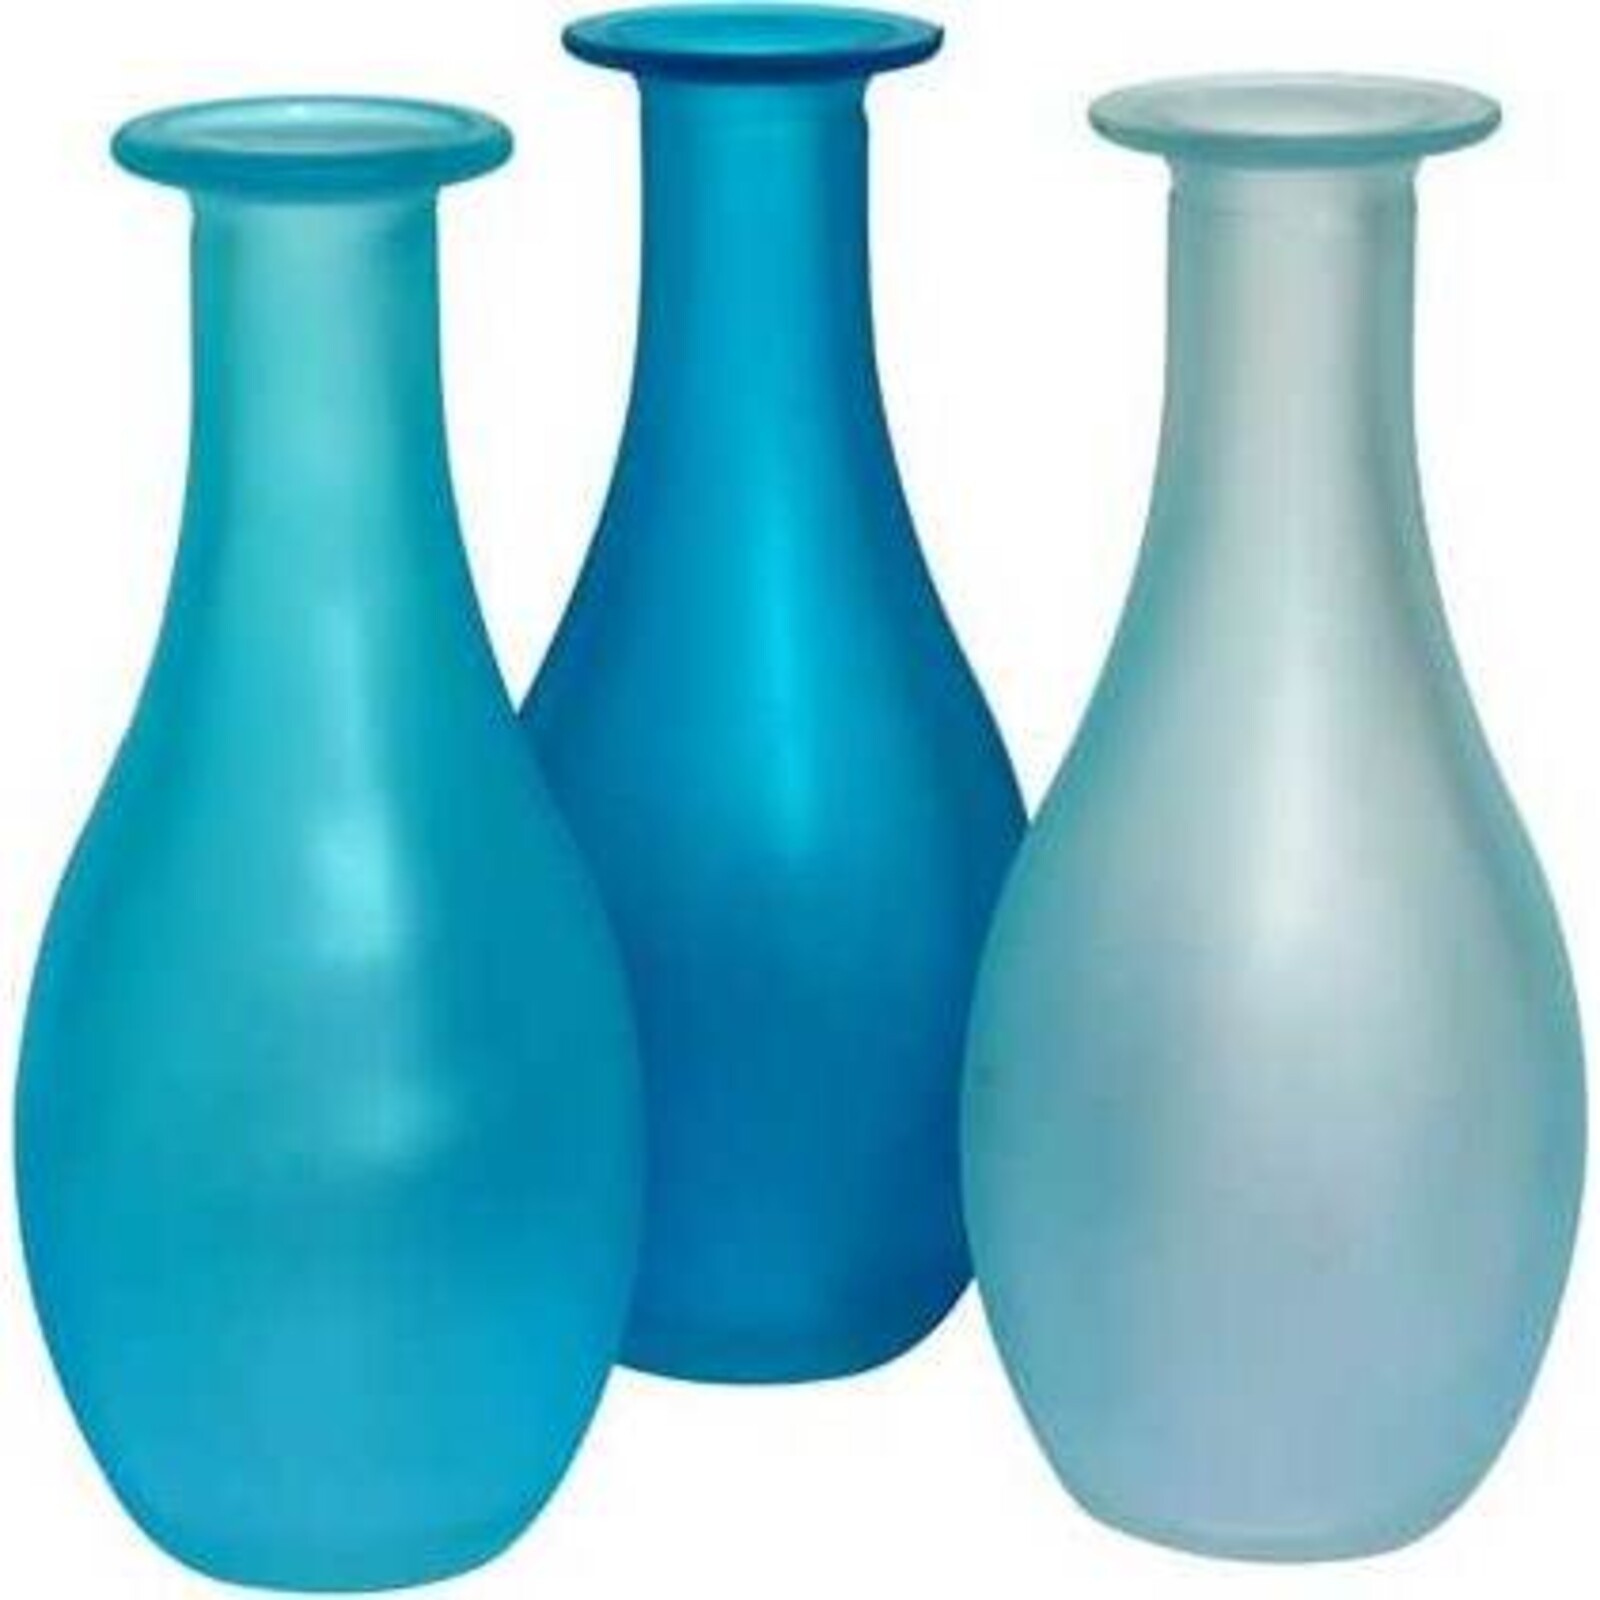 Trio Of Bottles - Blue Drop